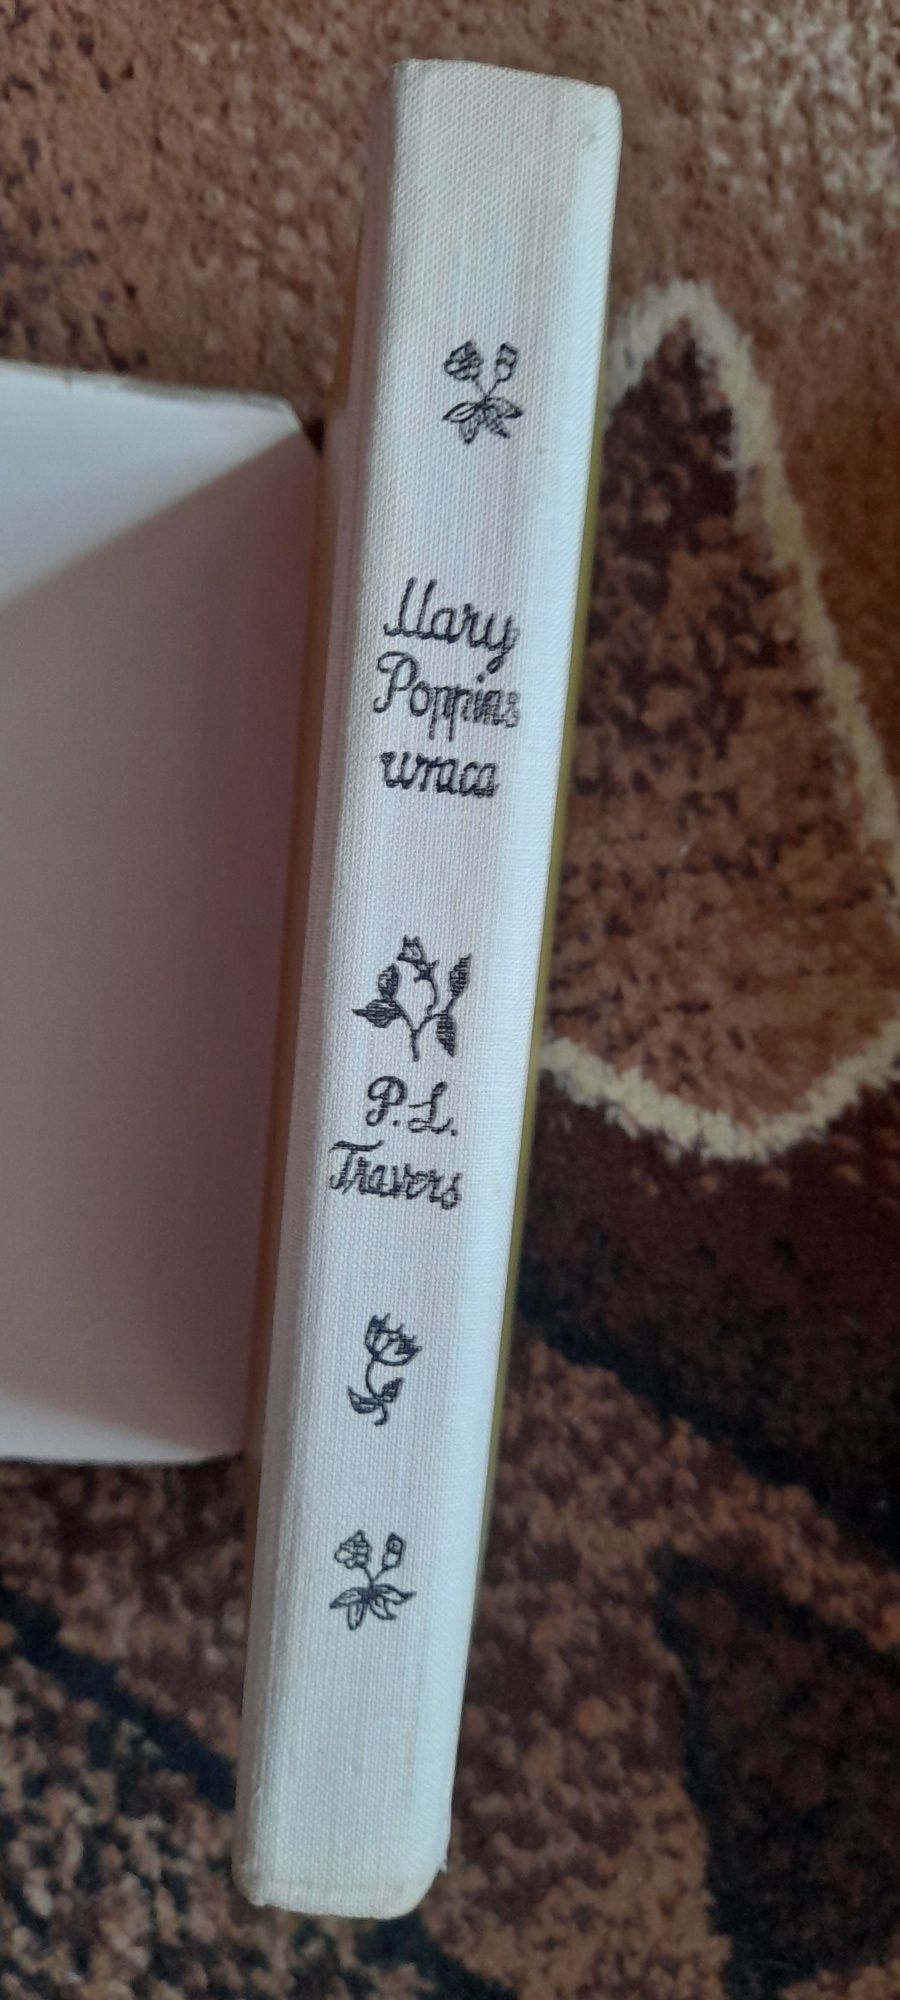 Mary Poppins wraca - P. L. Travers